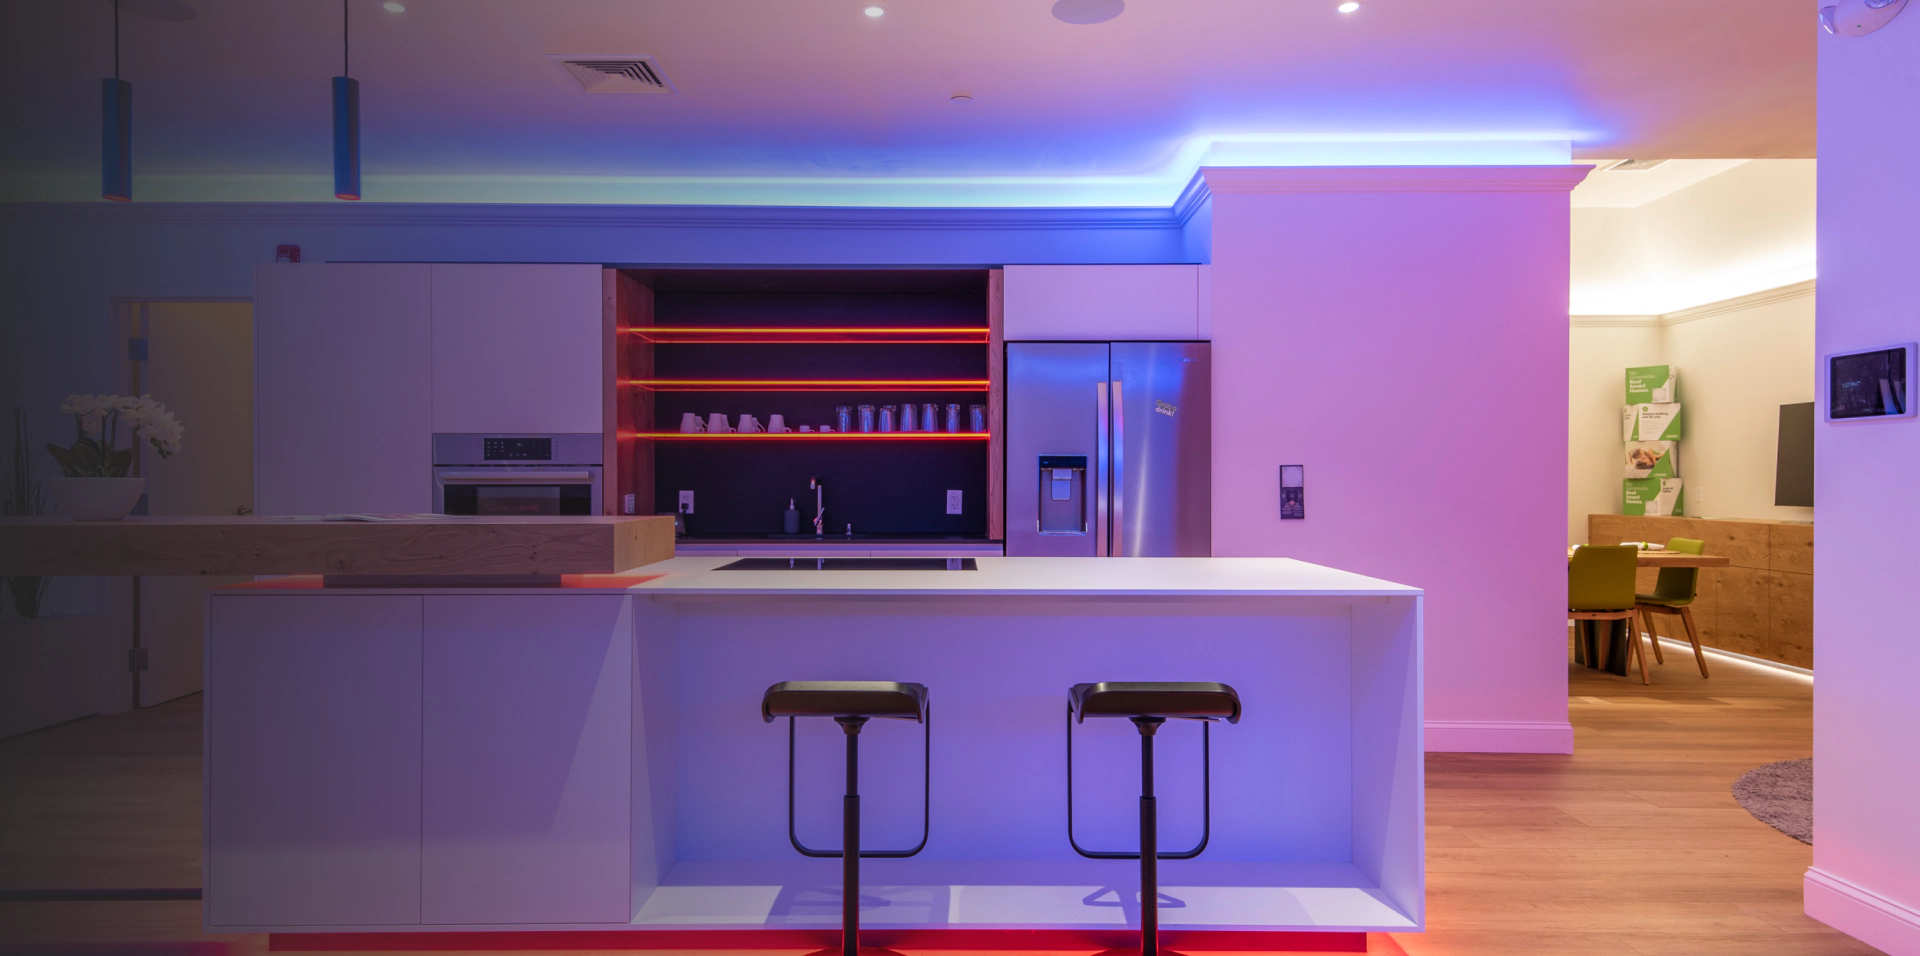 LED lights on a kitchen